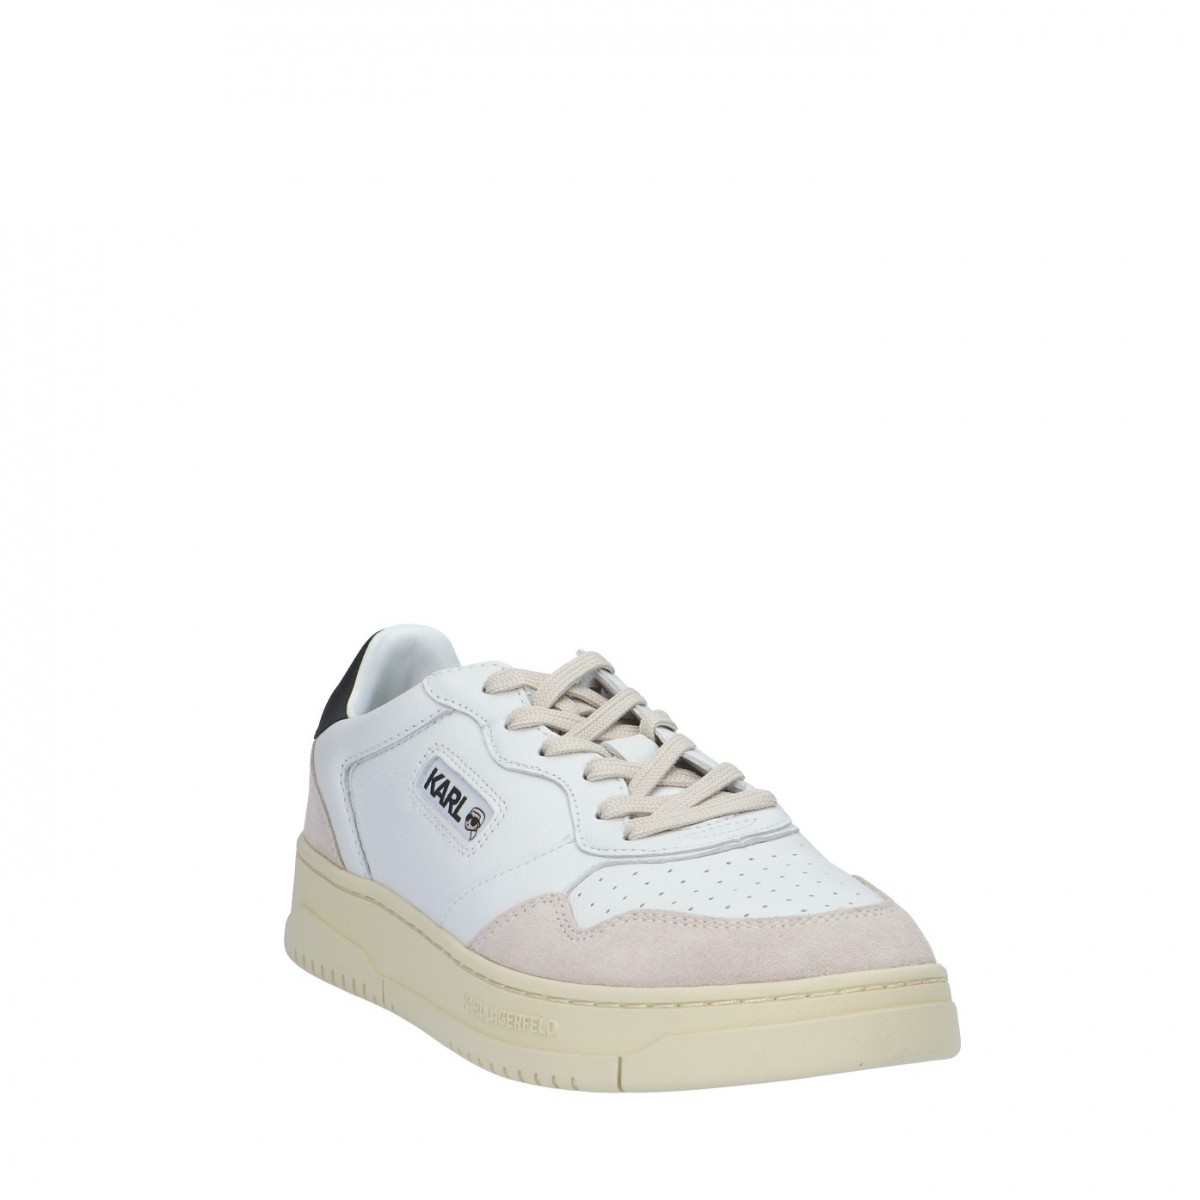 Karl lagerfeld Sneaker Bianco Gomma KL53020